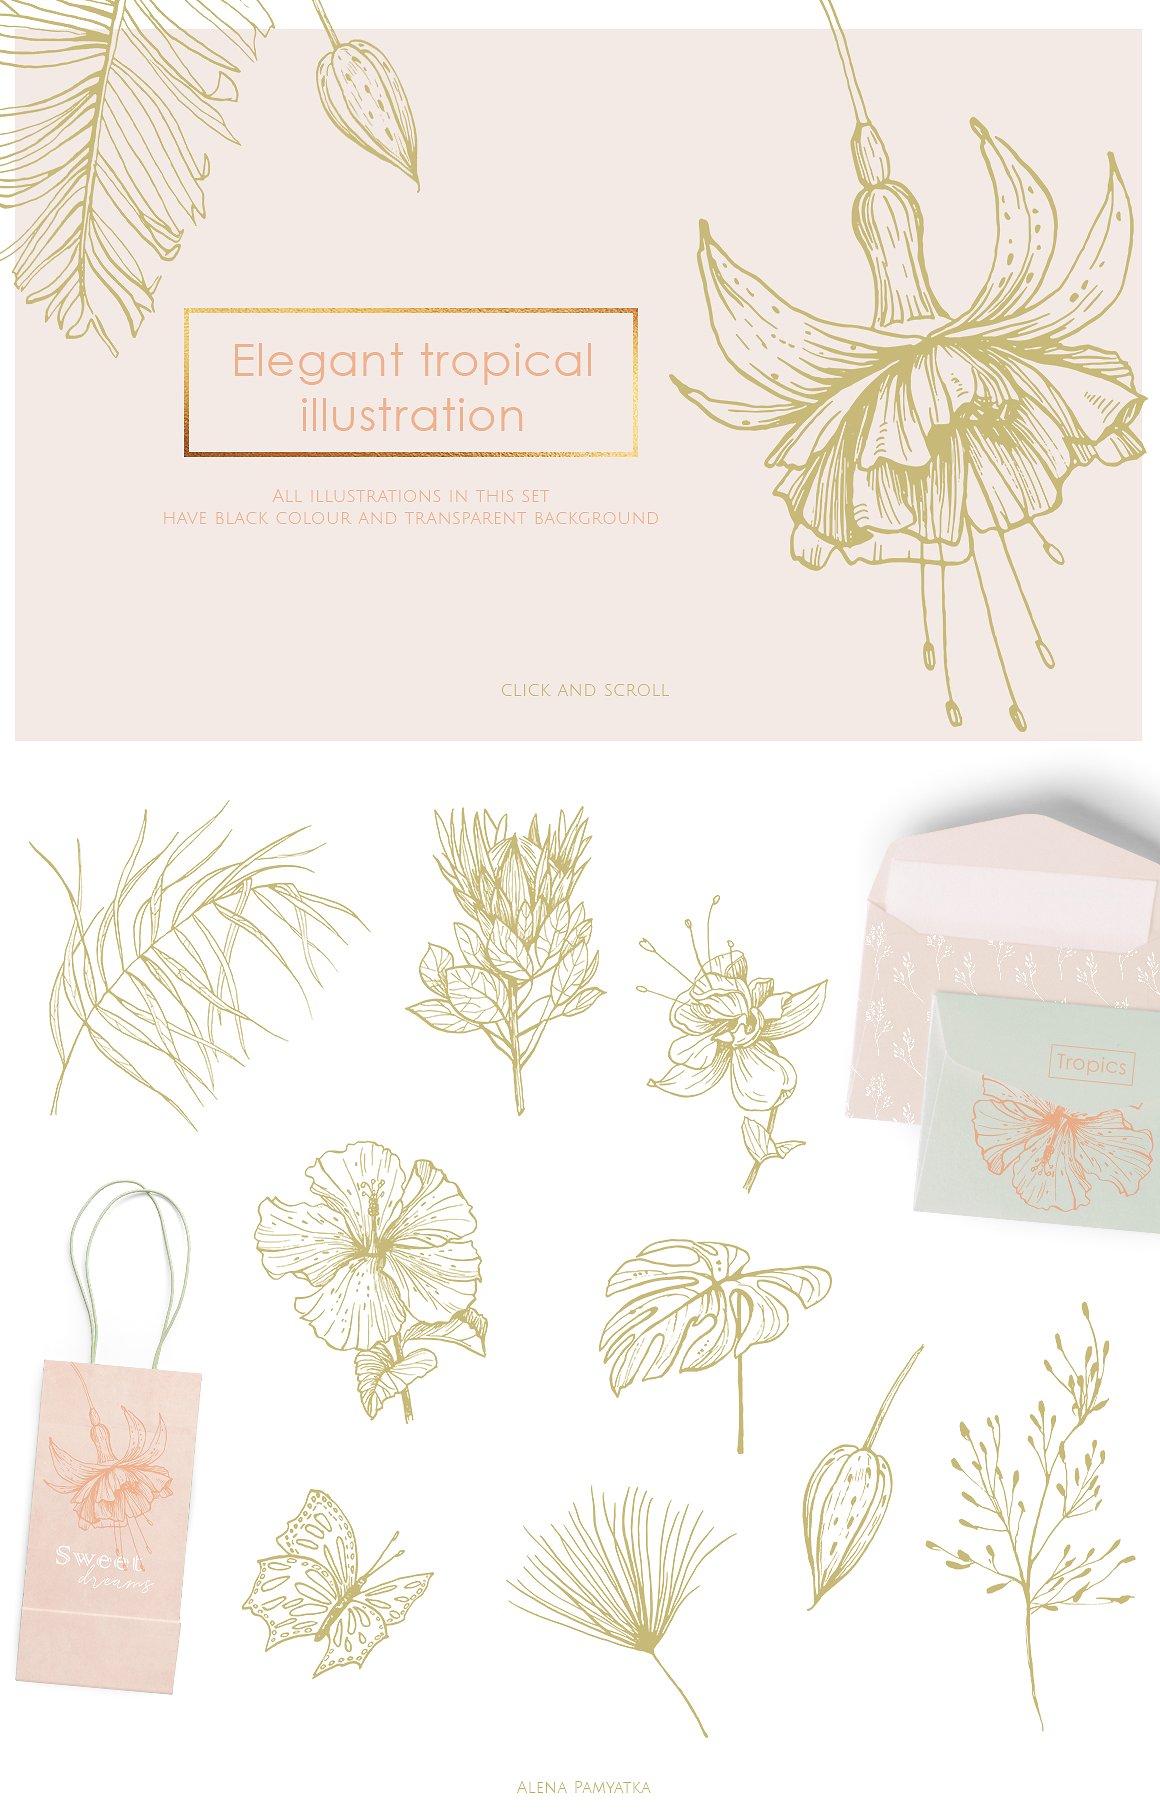 30款热带植物矢量图案集合 30 Tropical Illustrations And Patterns插图1